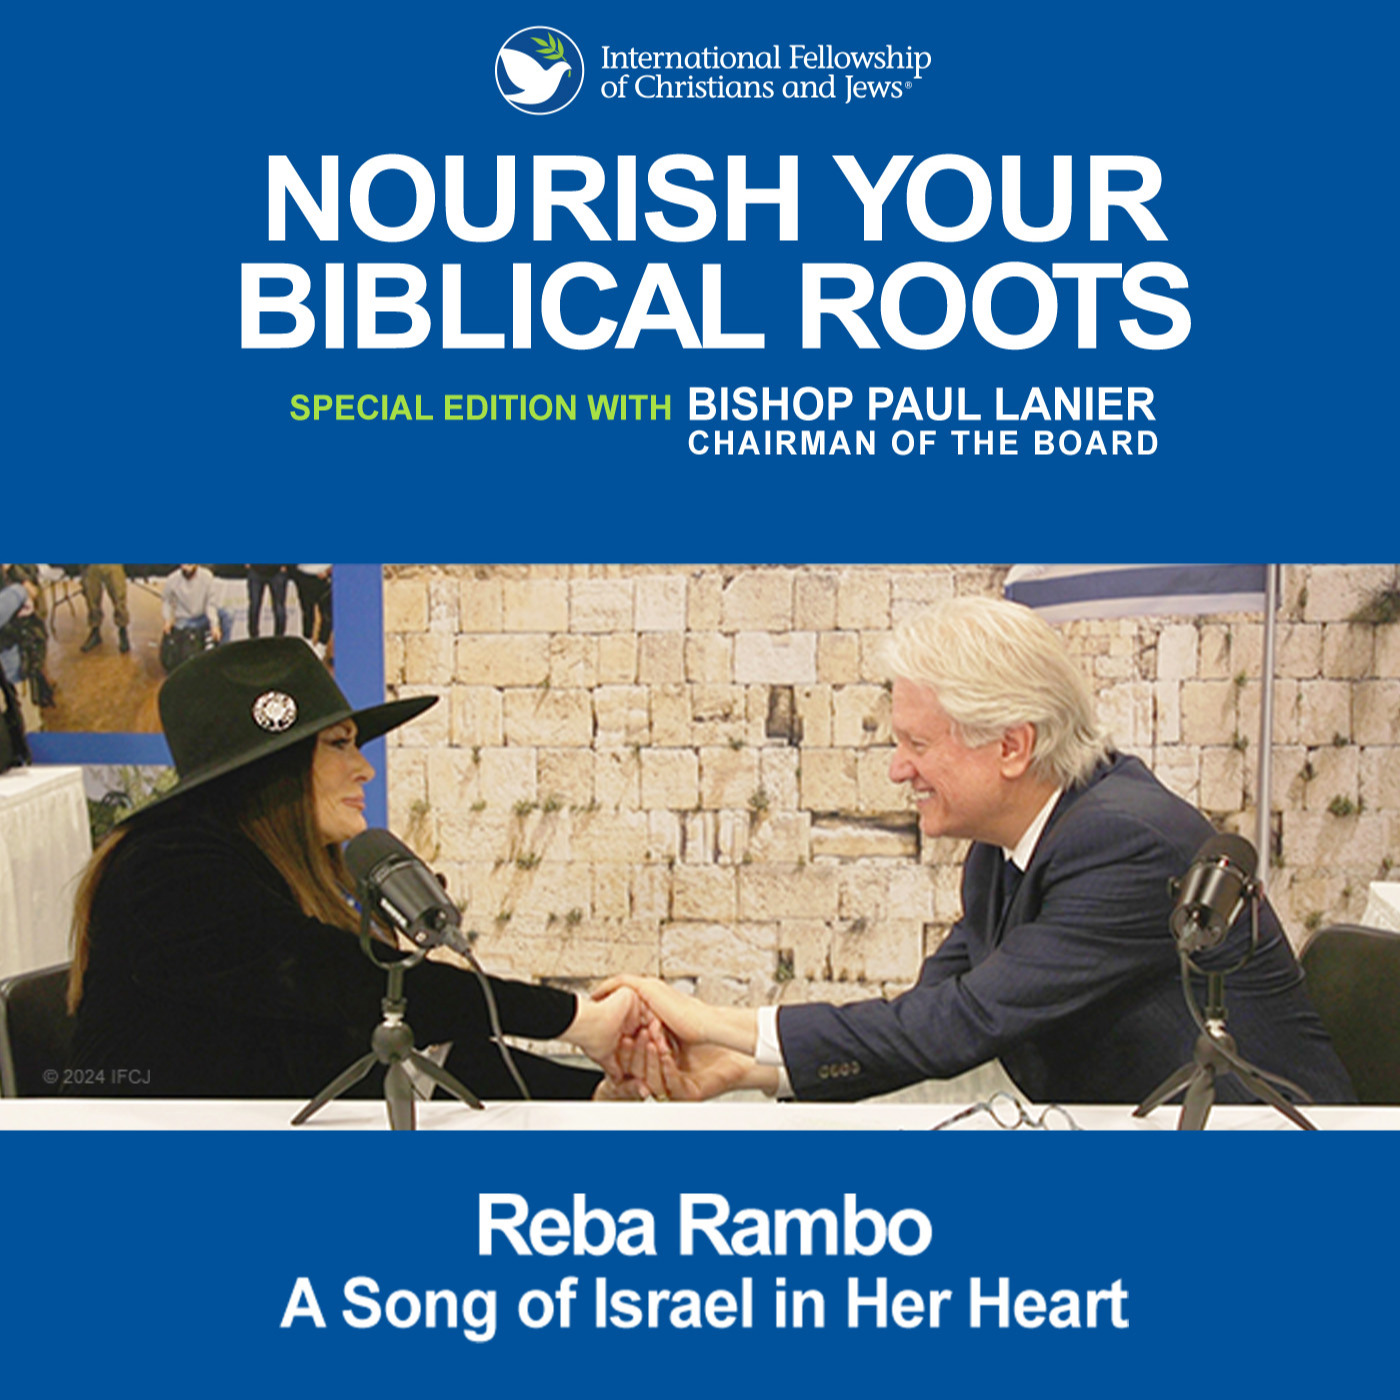 Reba Rambo—A Song of Israel in Her Heart